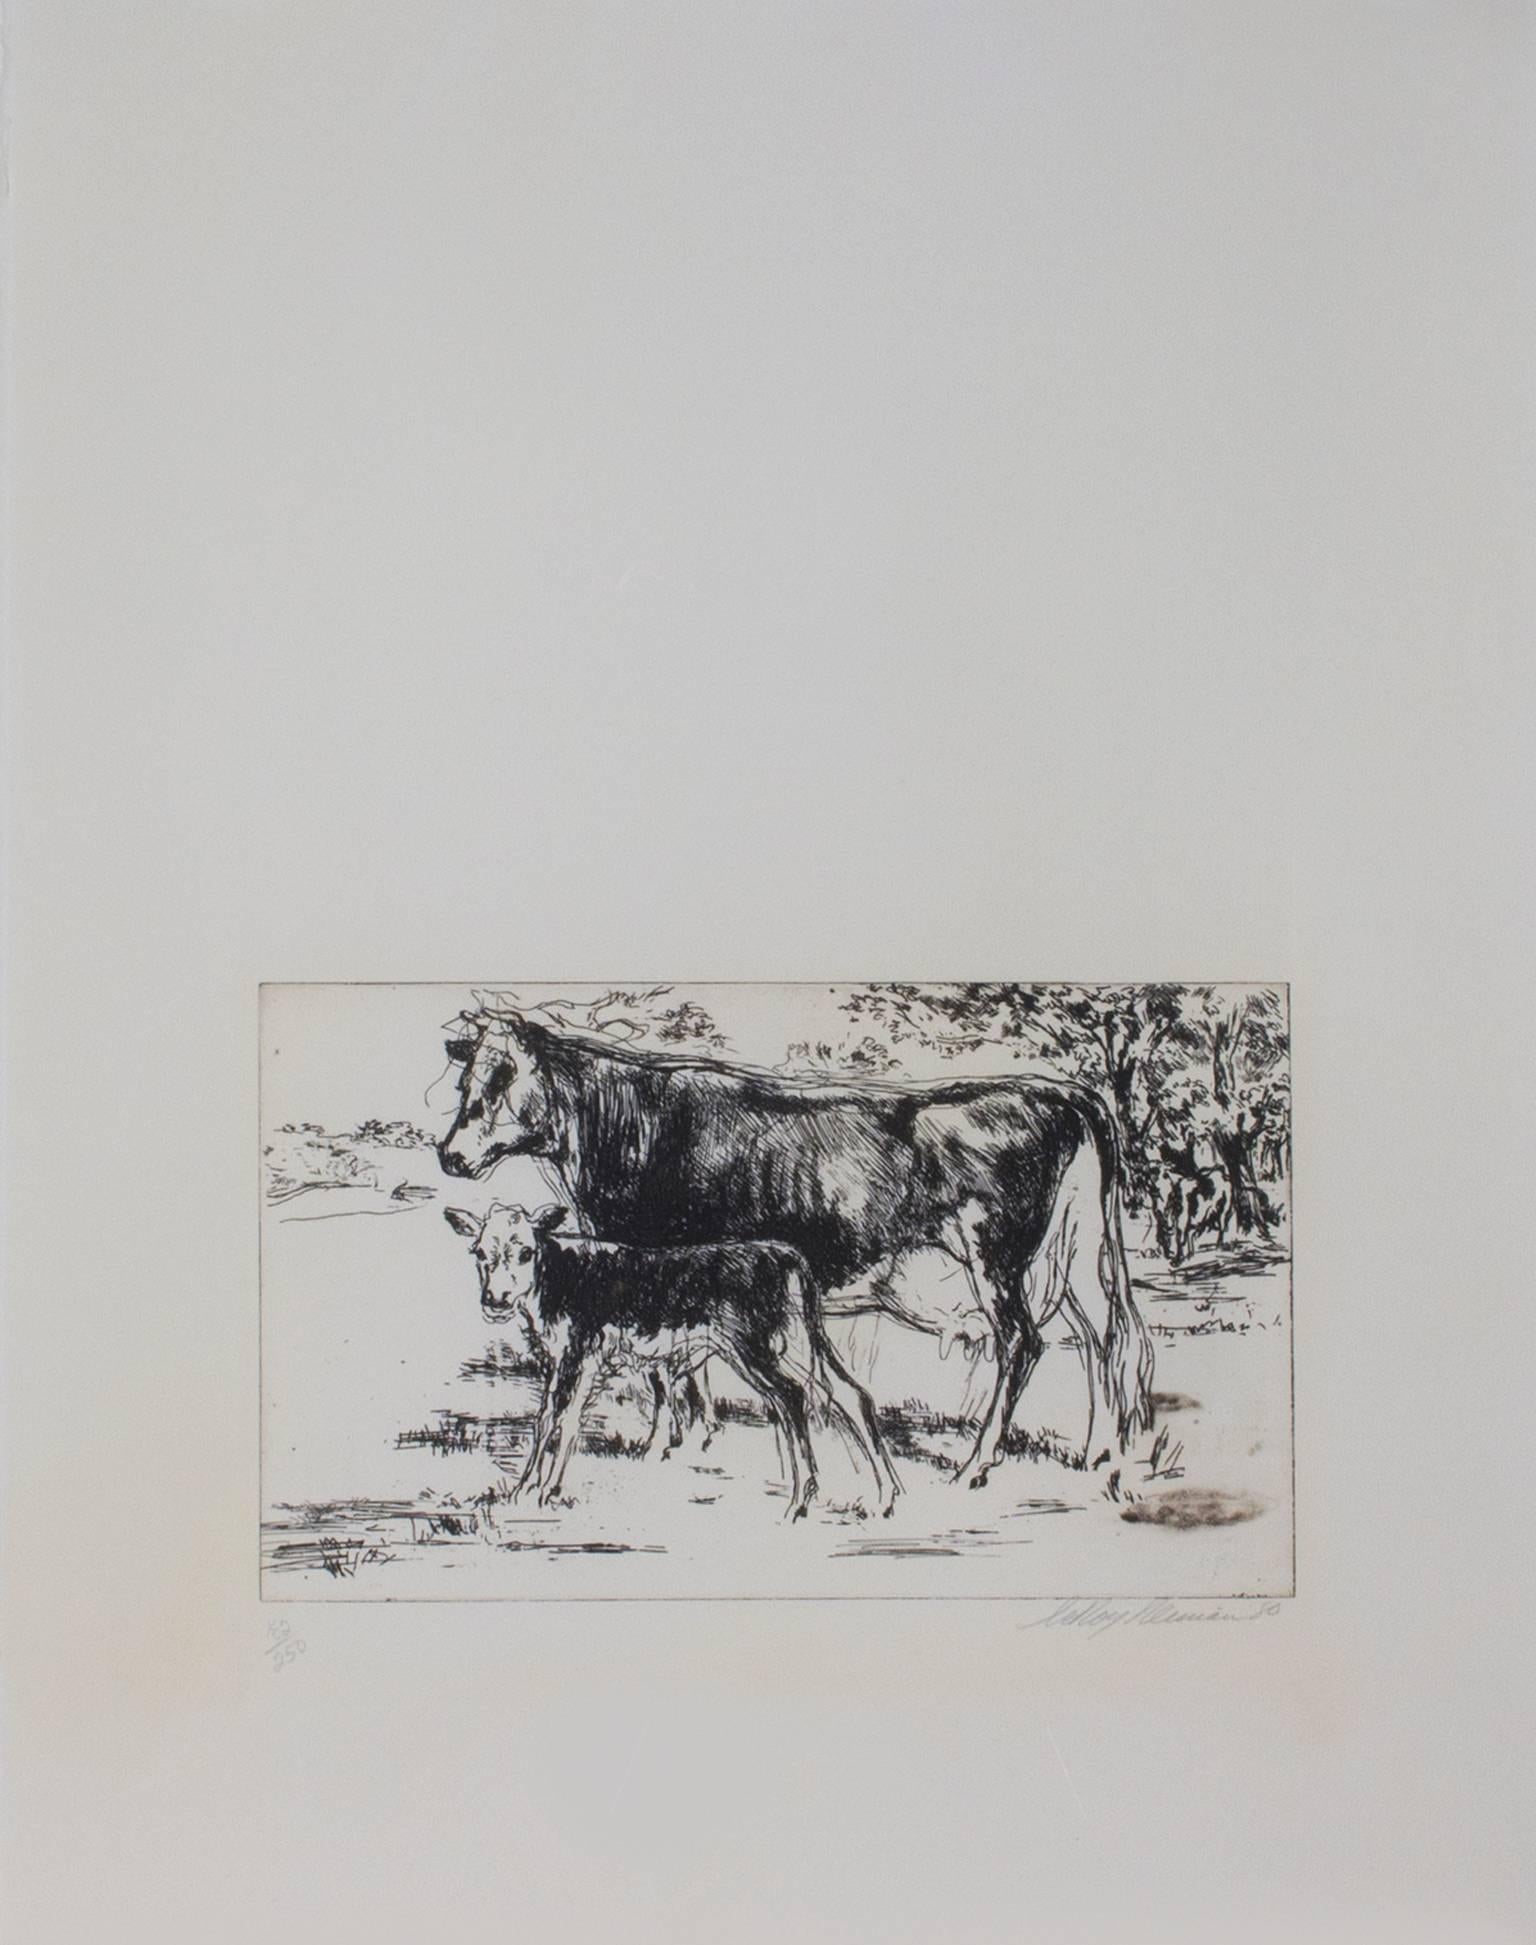 Leroy Neiman Animal Print - "Bovine Family, " Original Etching Farm Scene signed by LeRoy Neiman